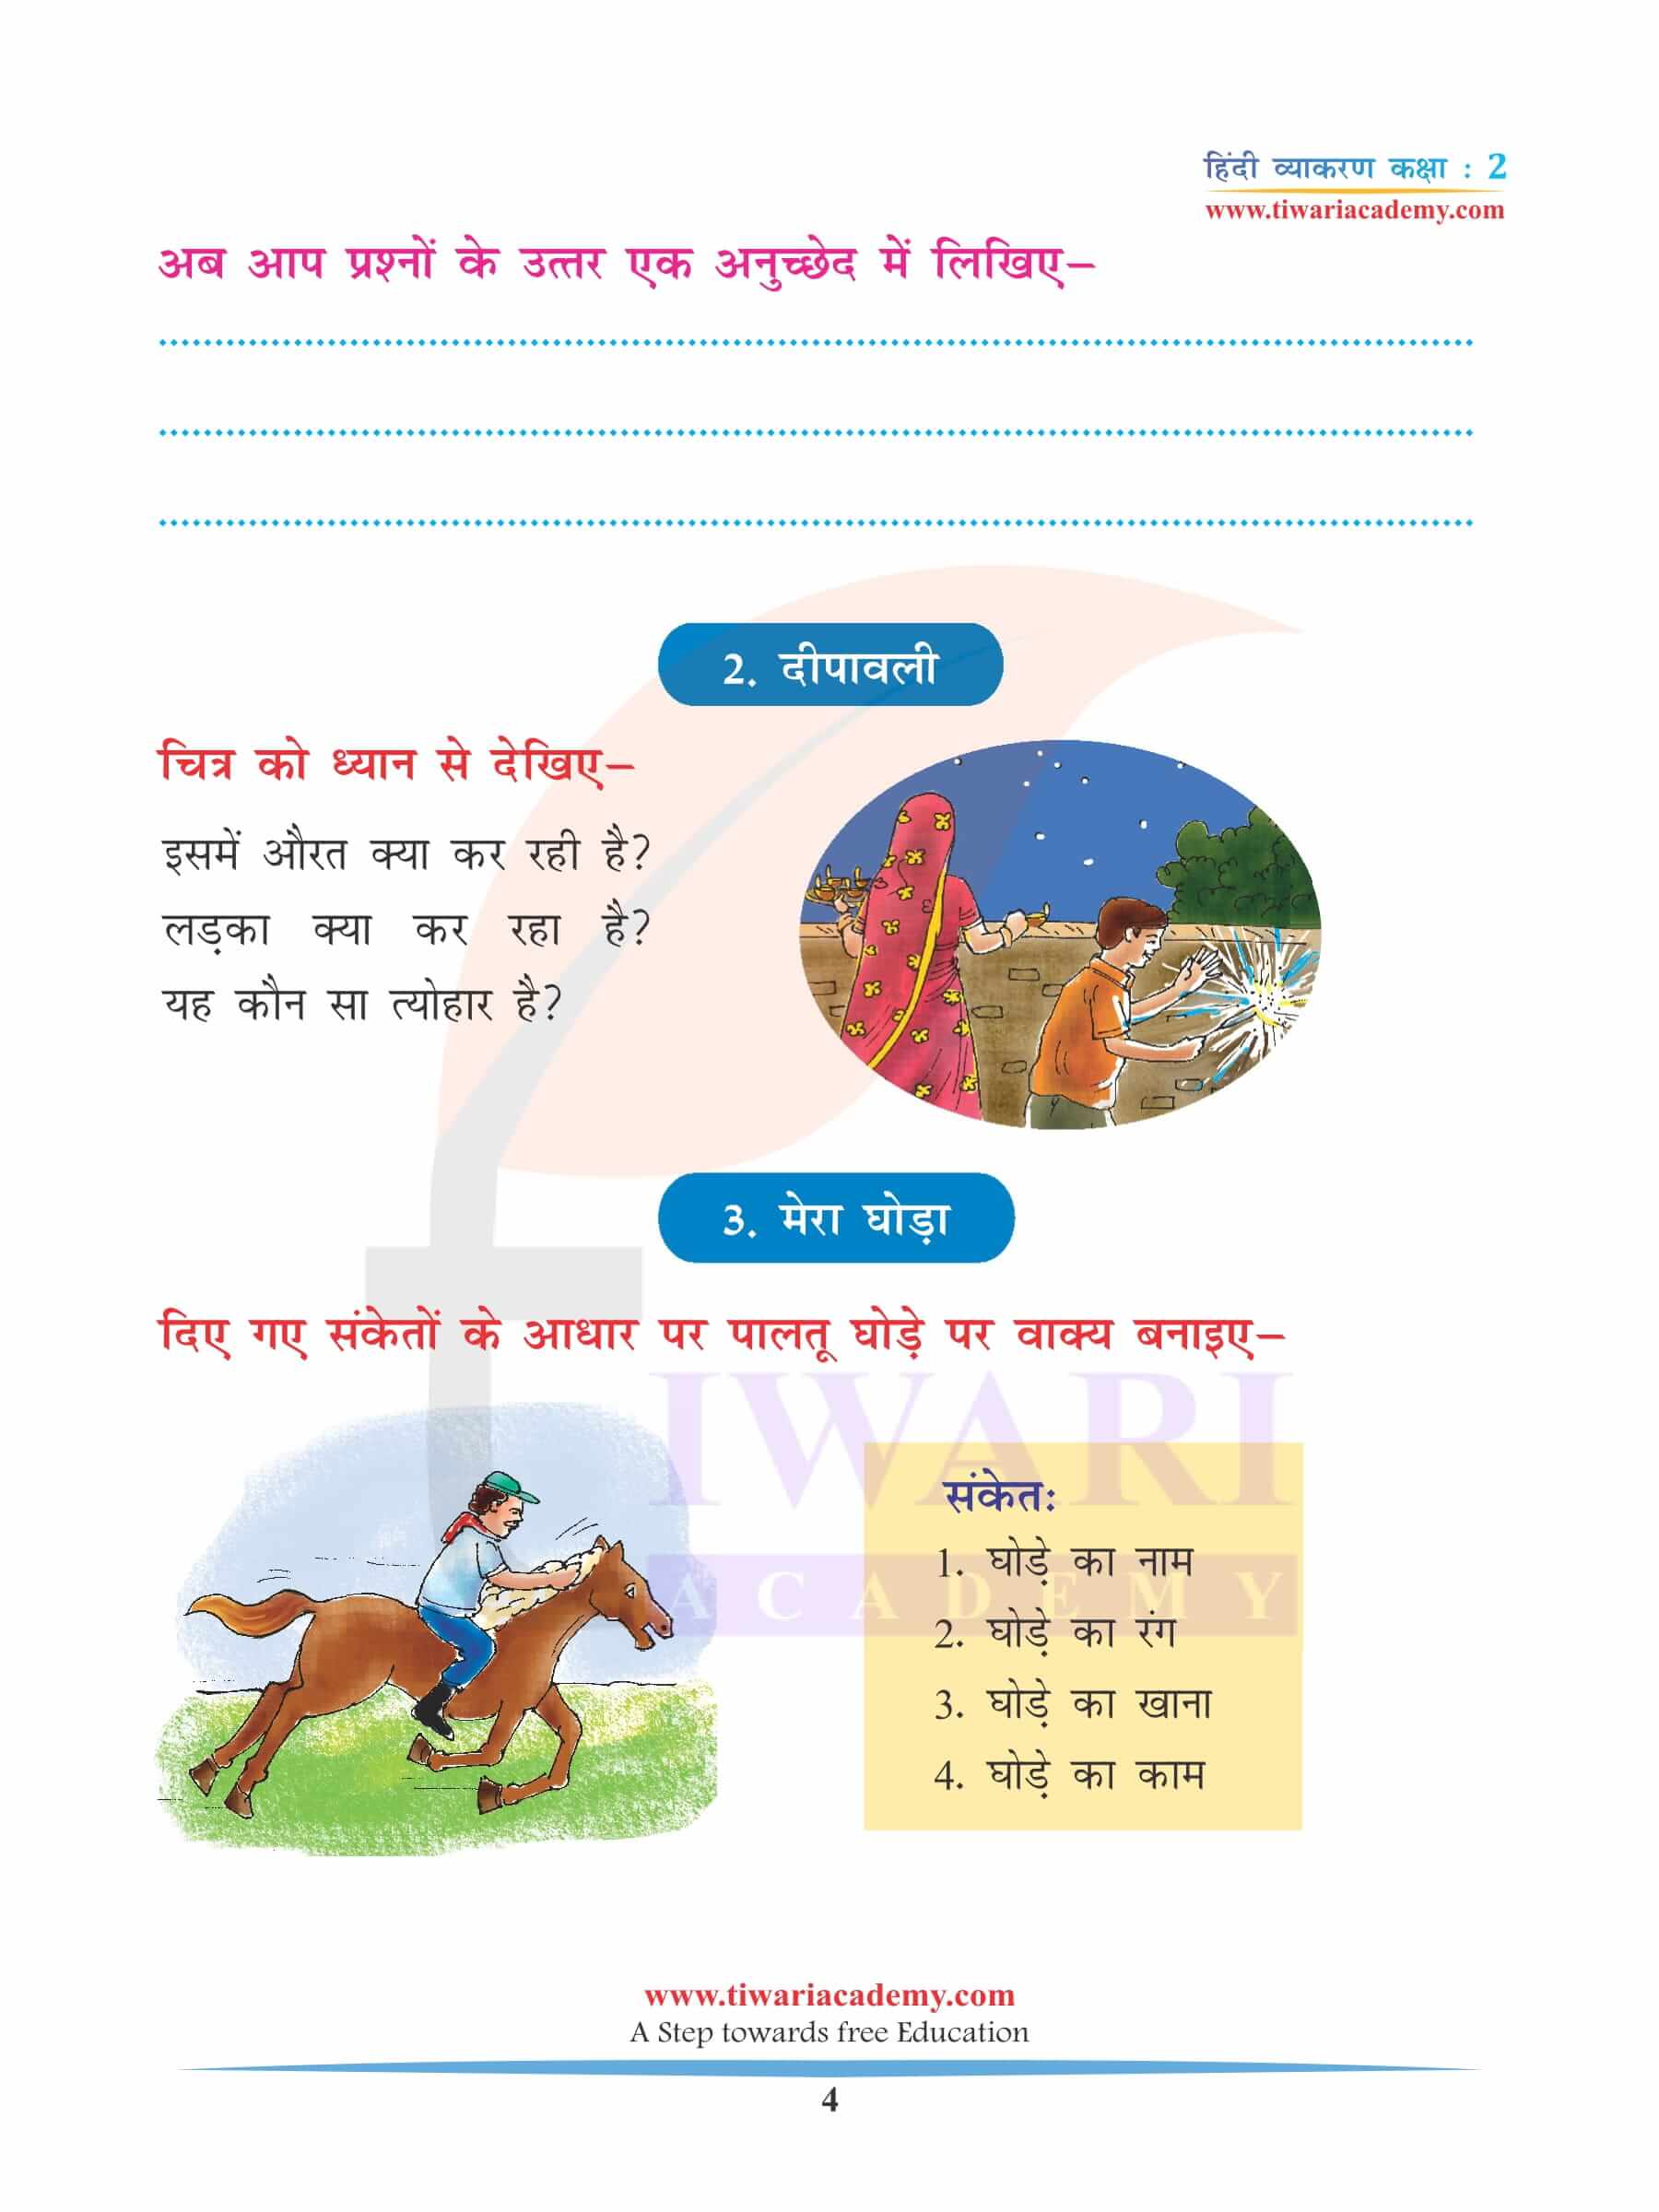 कक्षा 2 हिंदी व्याकरण अध्याय 13 लेखन और कहानी लेखन